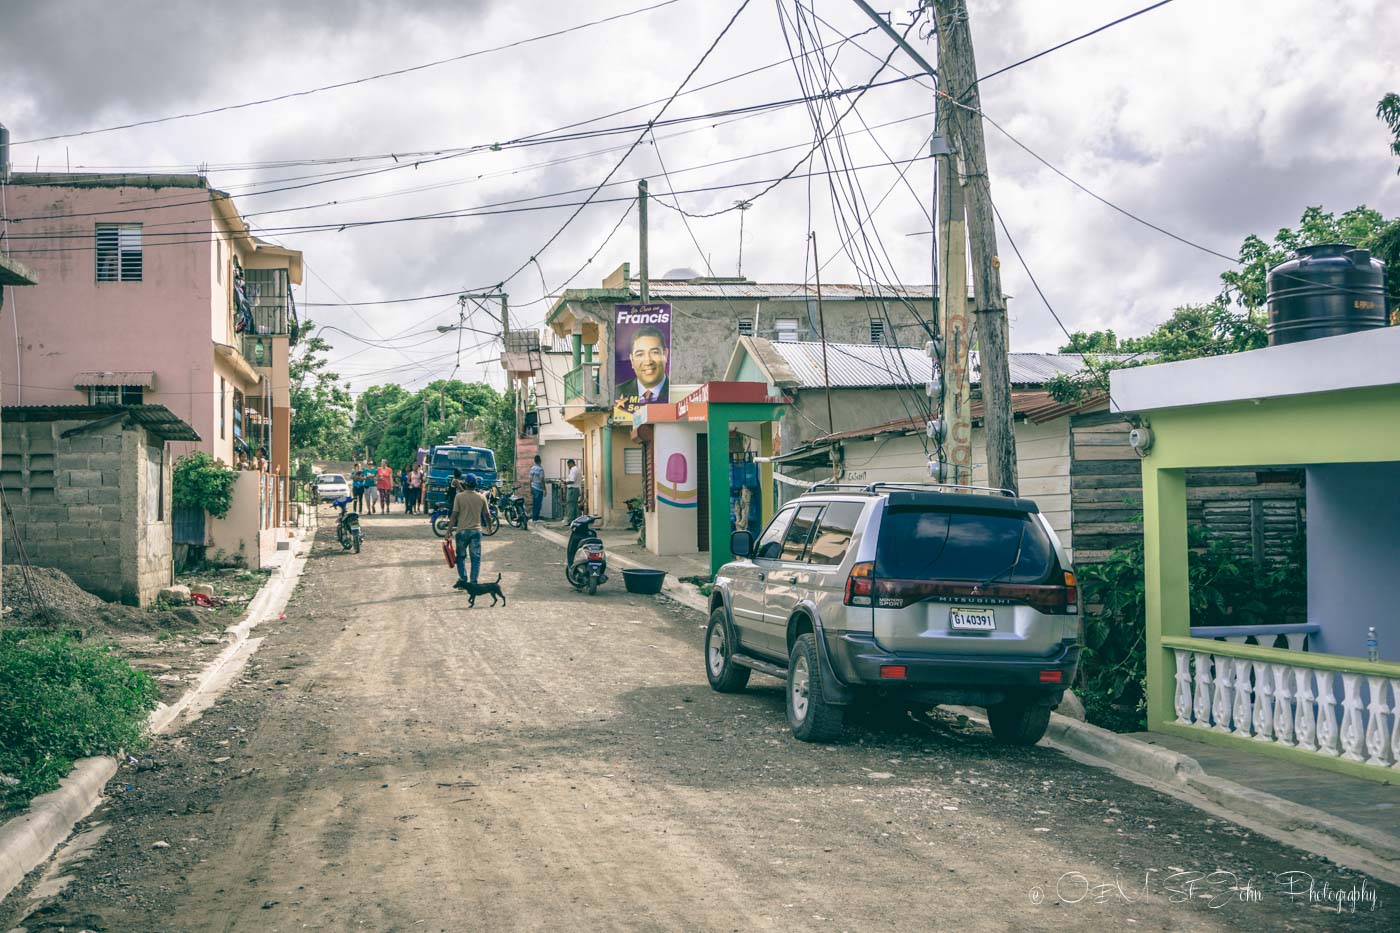 Rural street in Puerto Plata, Dominican Republic